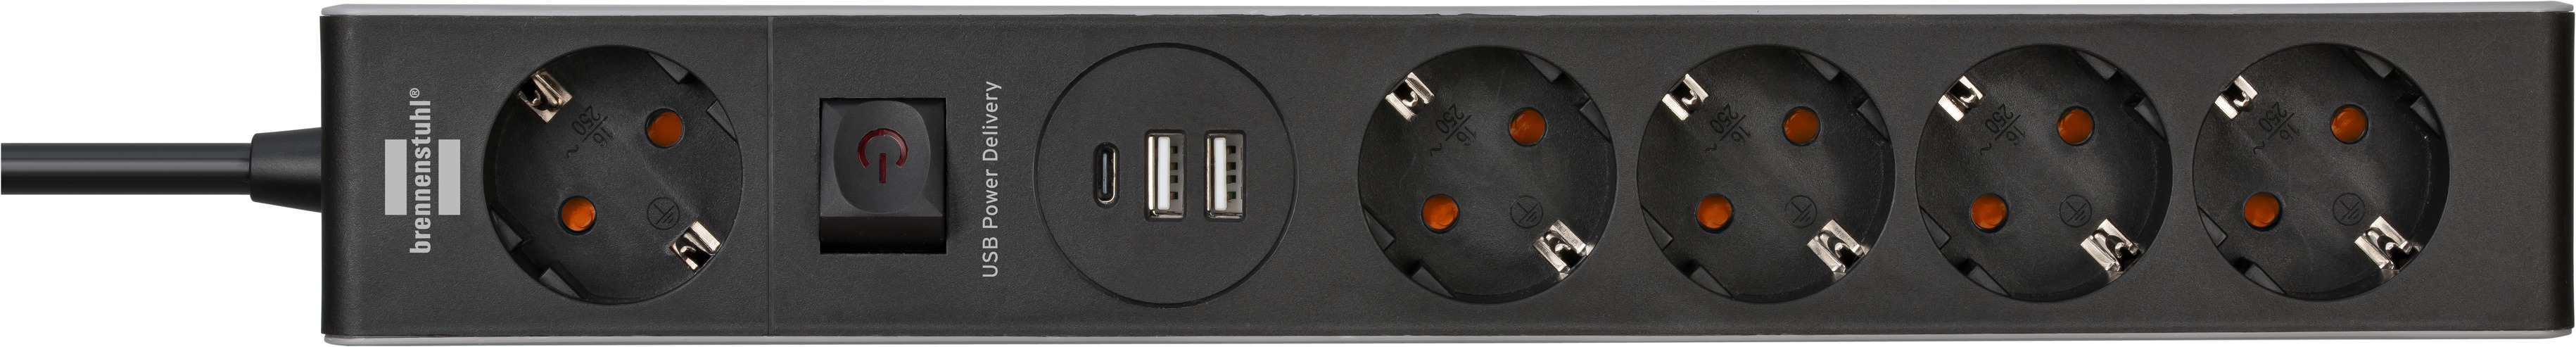 Regleta de enchufes de 5 vías con USB Power Delivery para carga rápida (1x  cargador tipo C, 2x USB 2,4 A, cable de 1,5 m, con interruptor) TYPE F